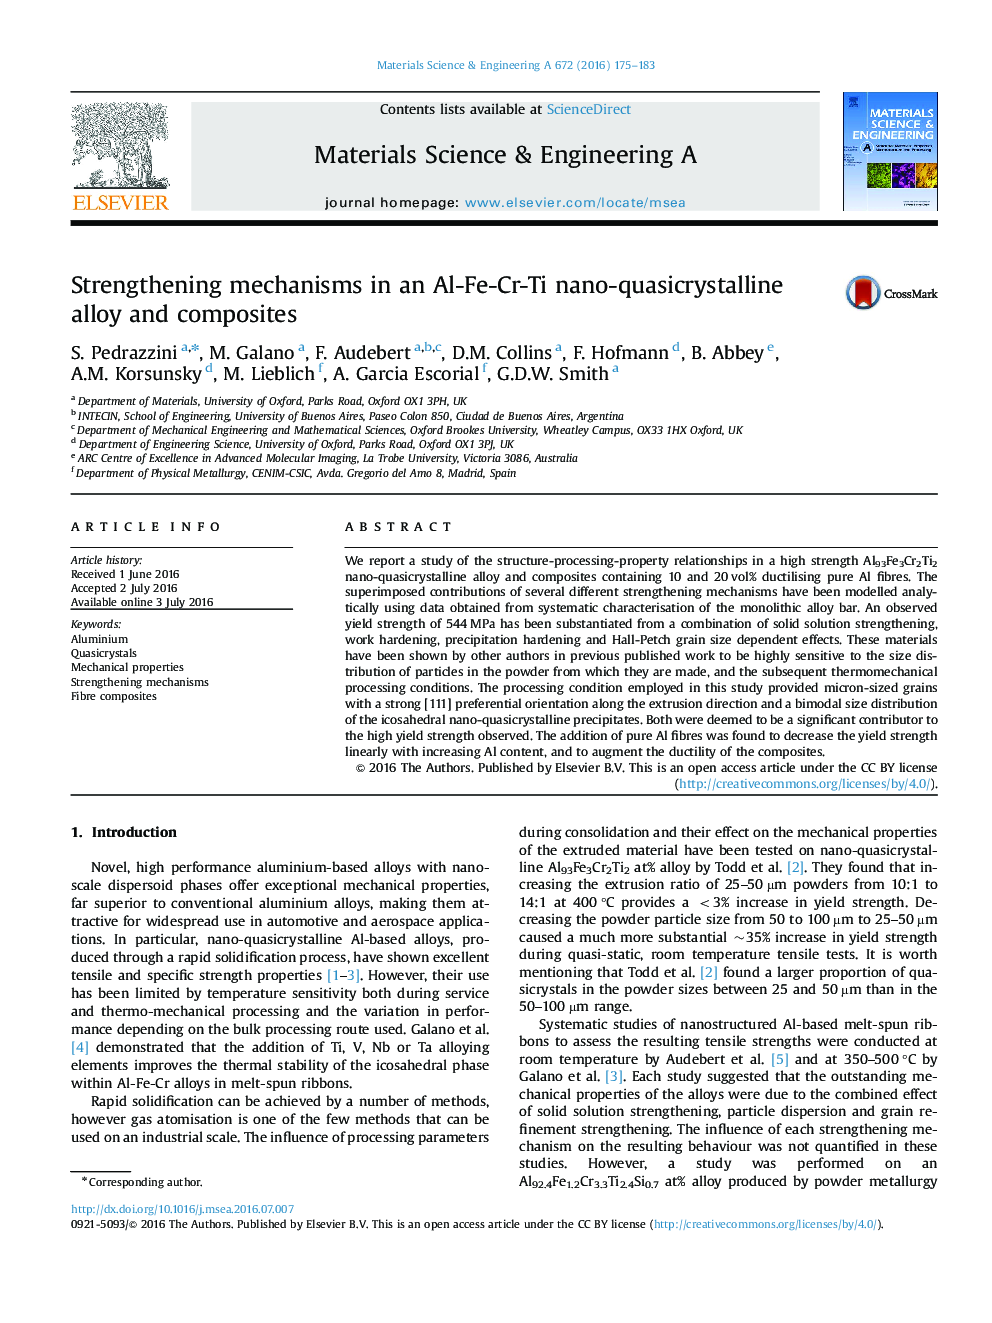 Strengthening mechanisms in an Al-Fe-Cr-Ti nano-quasicrystalline alloy and composites